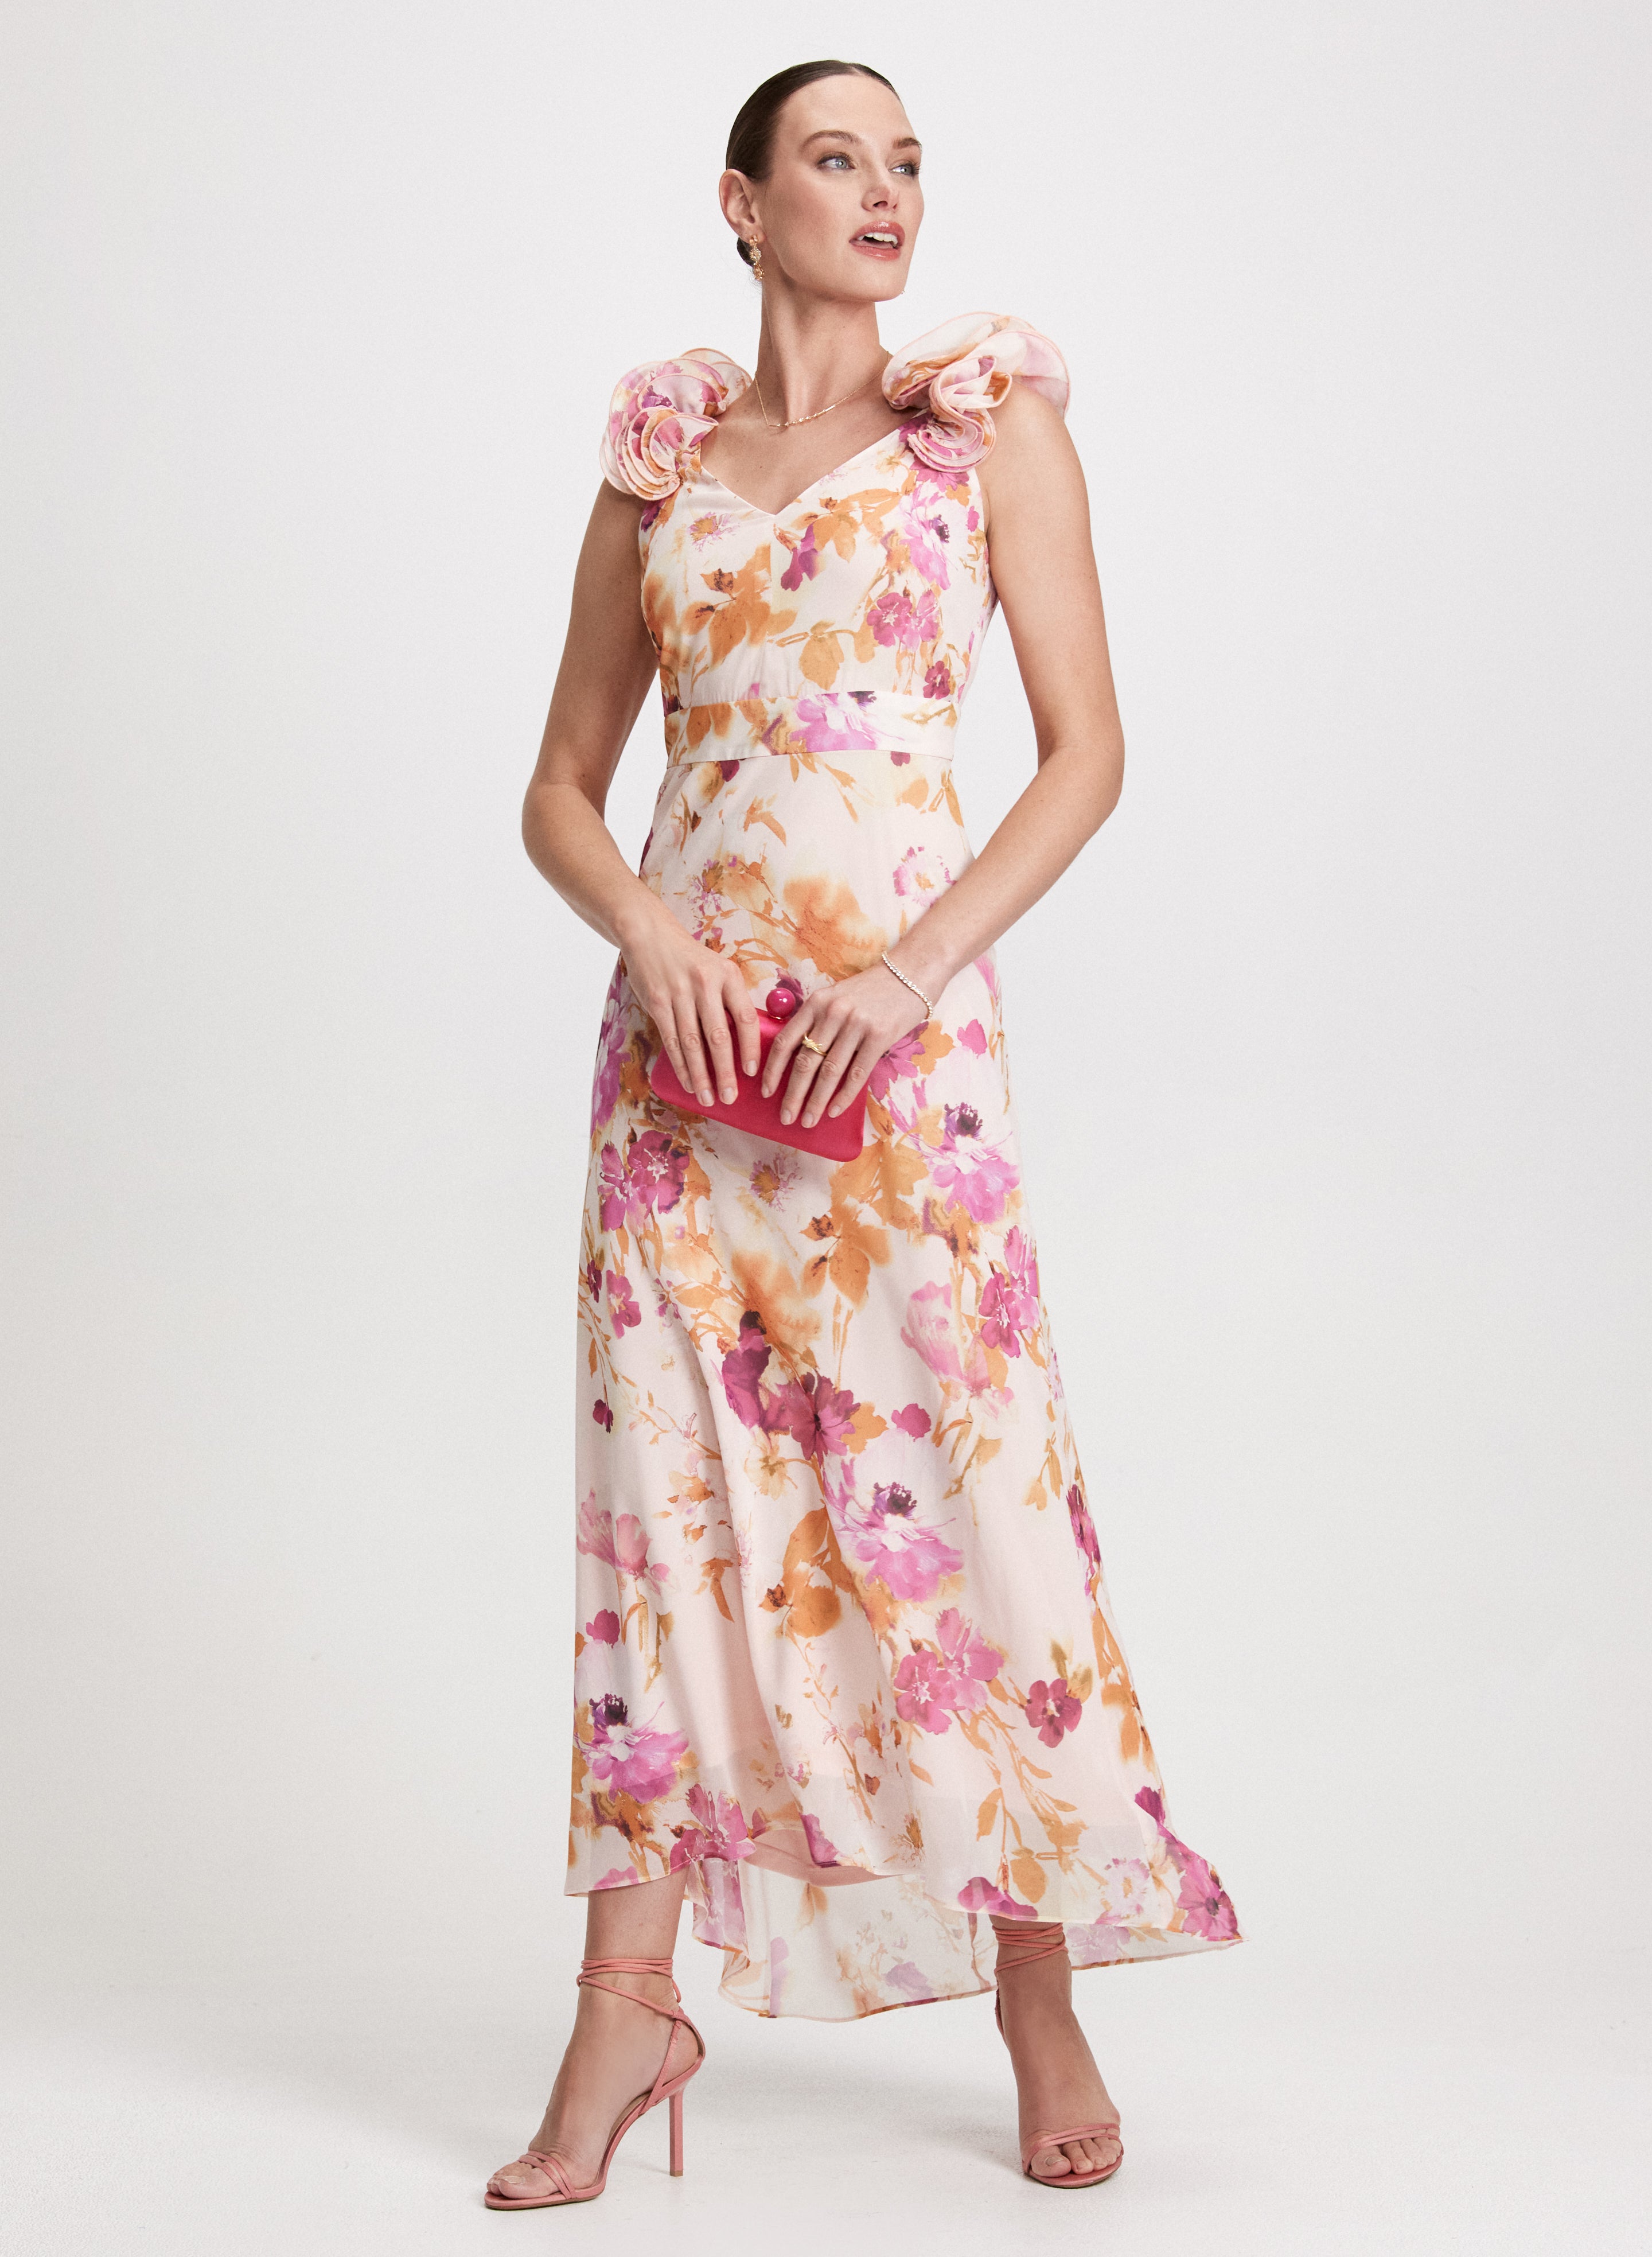 Ruffled Strap Floral Dress